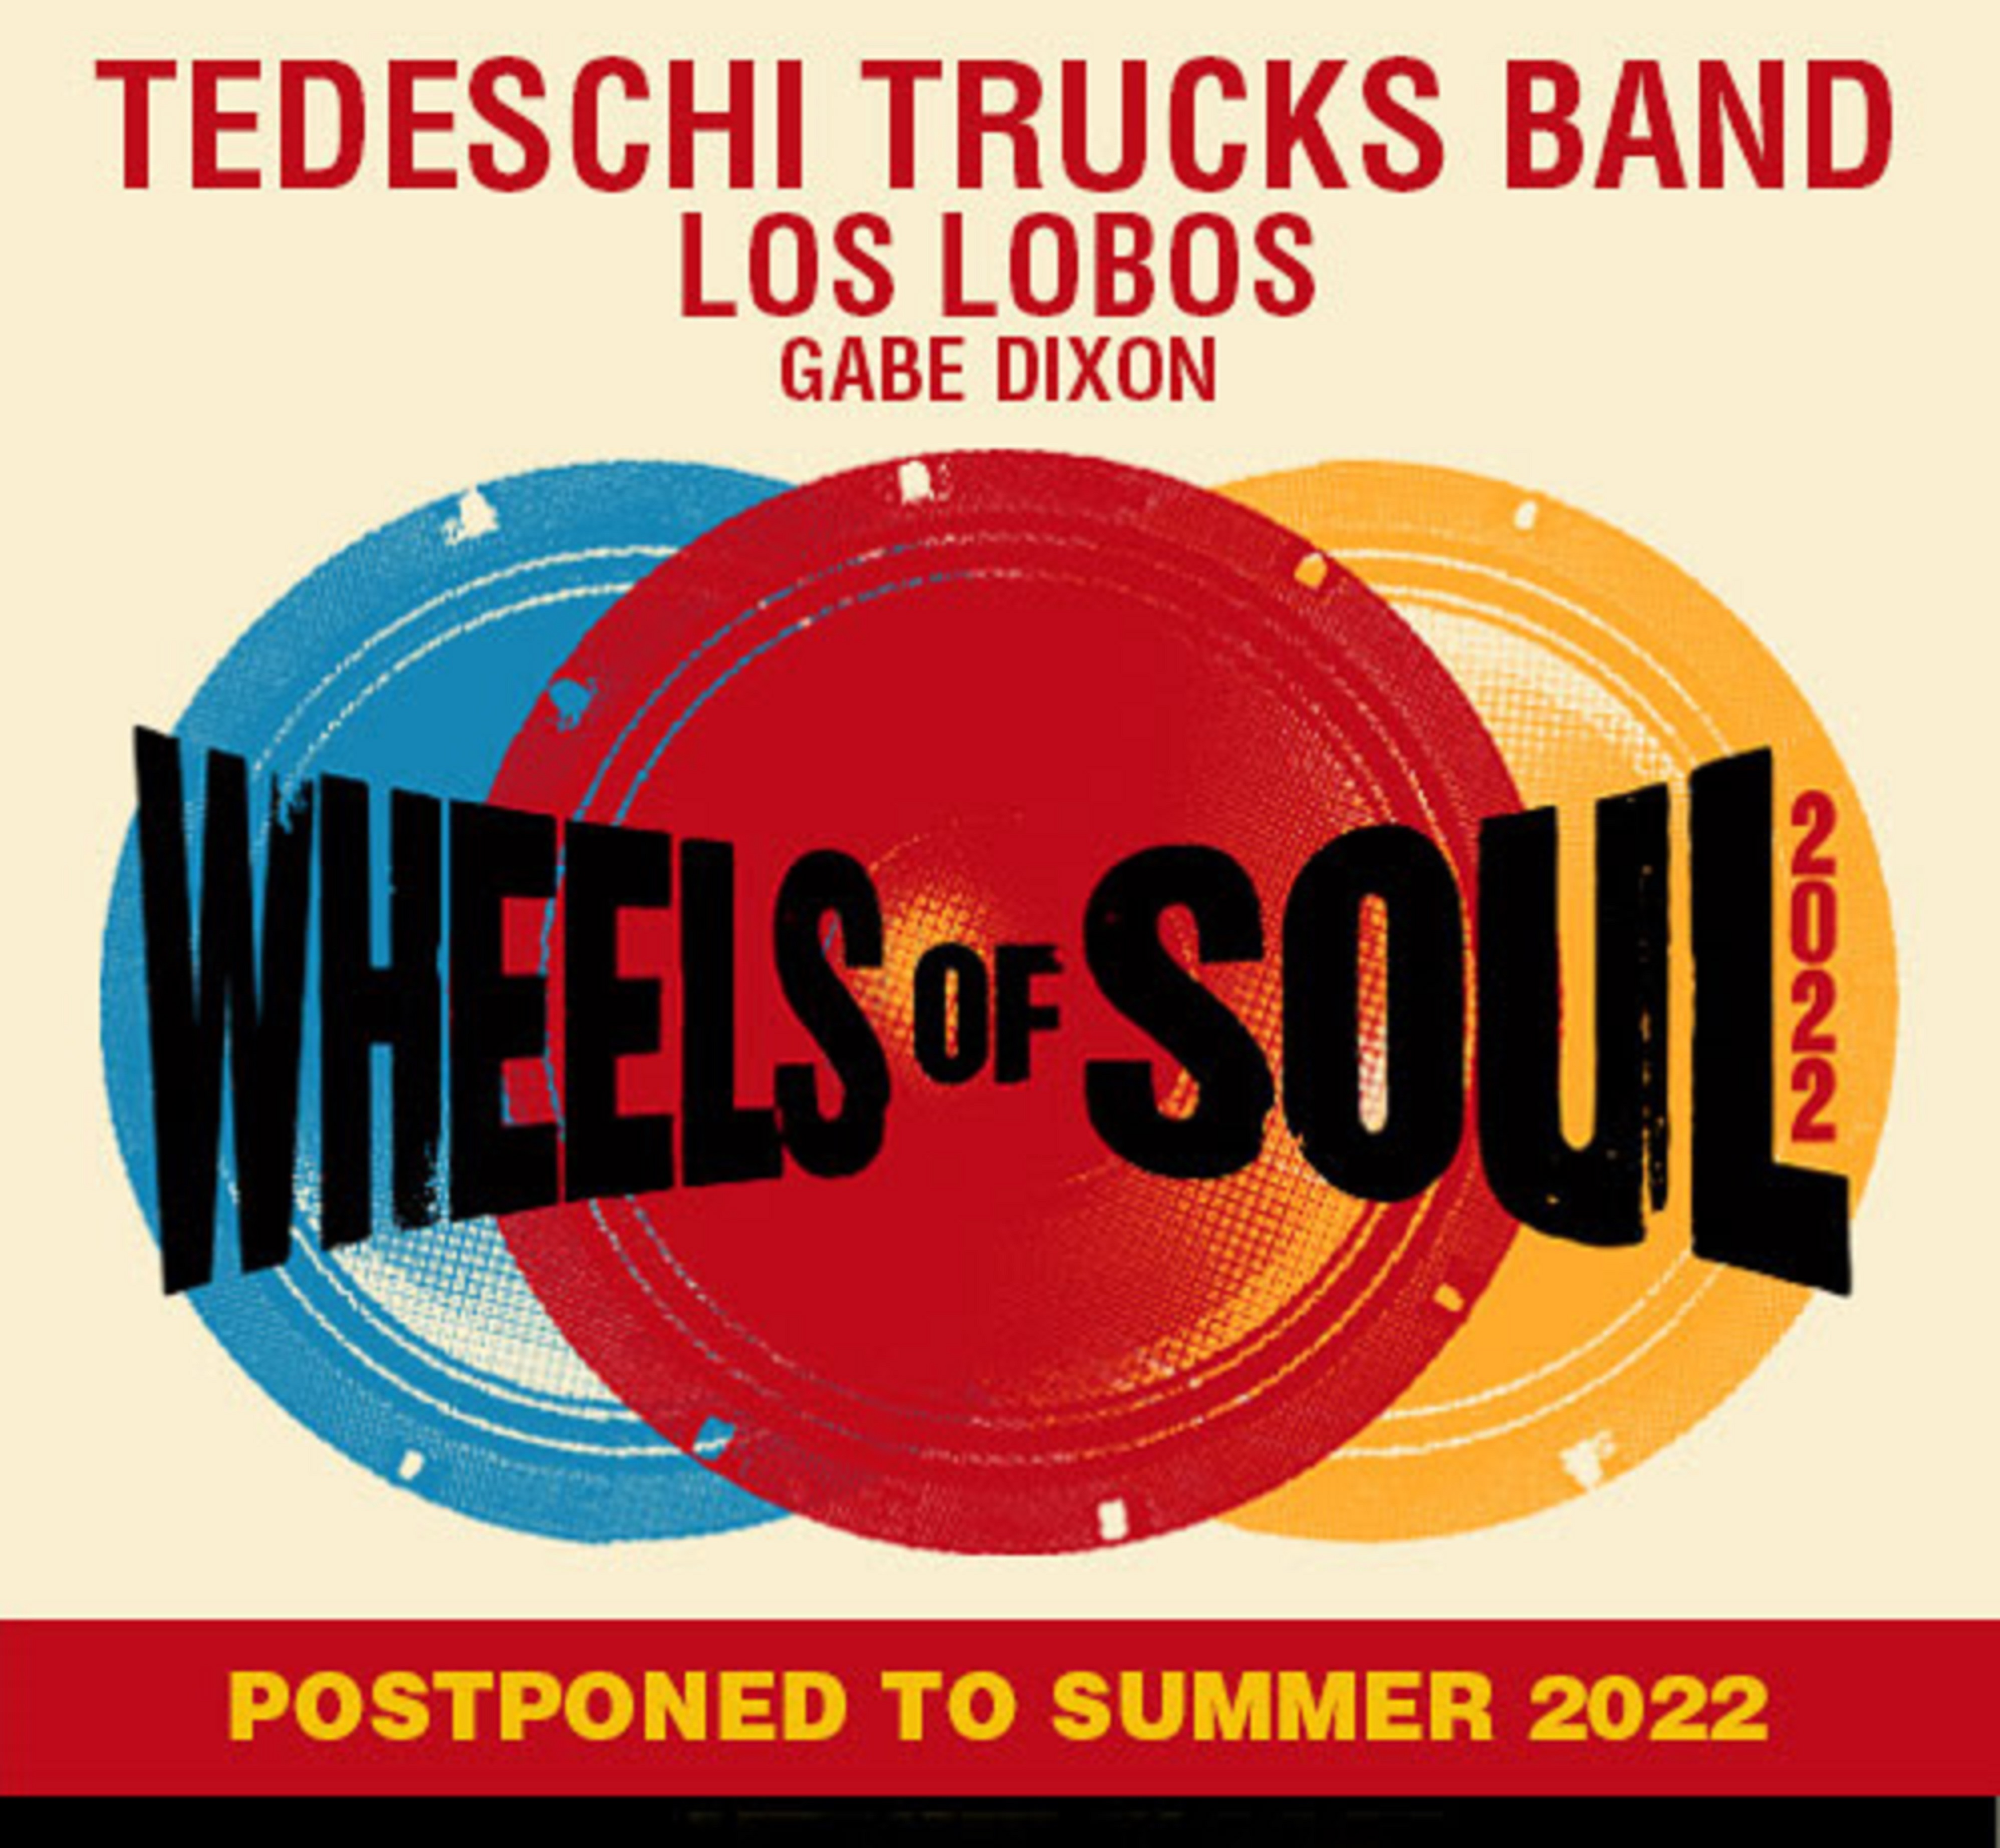 TEDESCHI TRUCKS BAND Postpones Summer 'Wheels of Soul' Tour to 2022